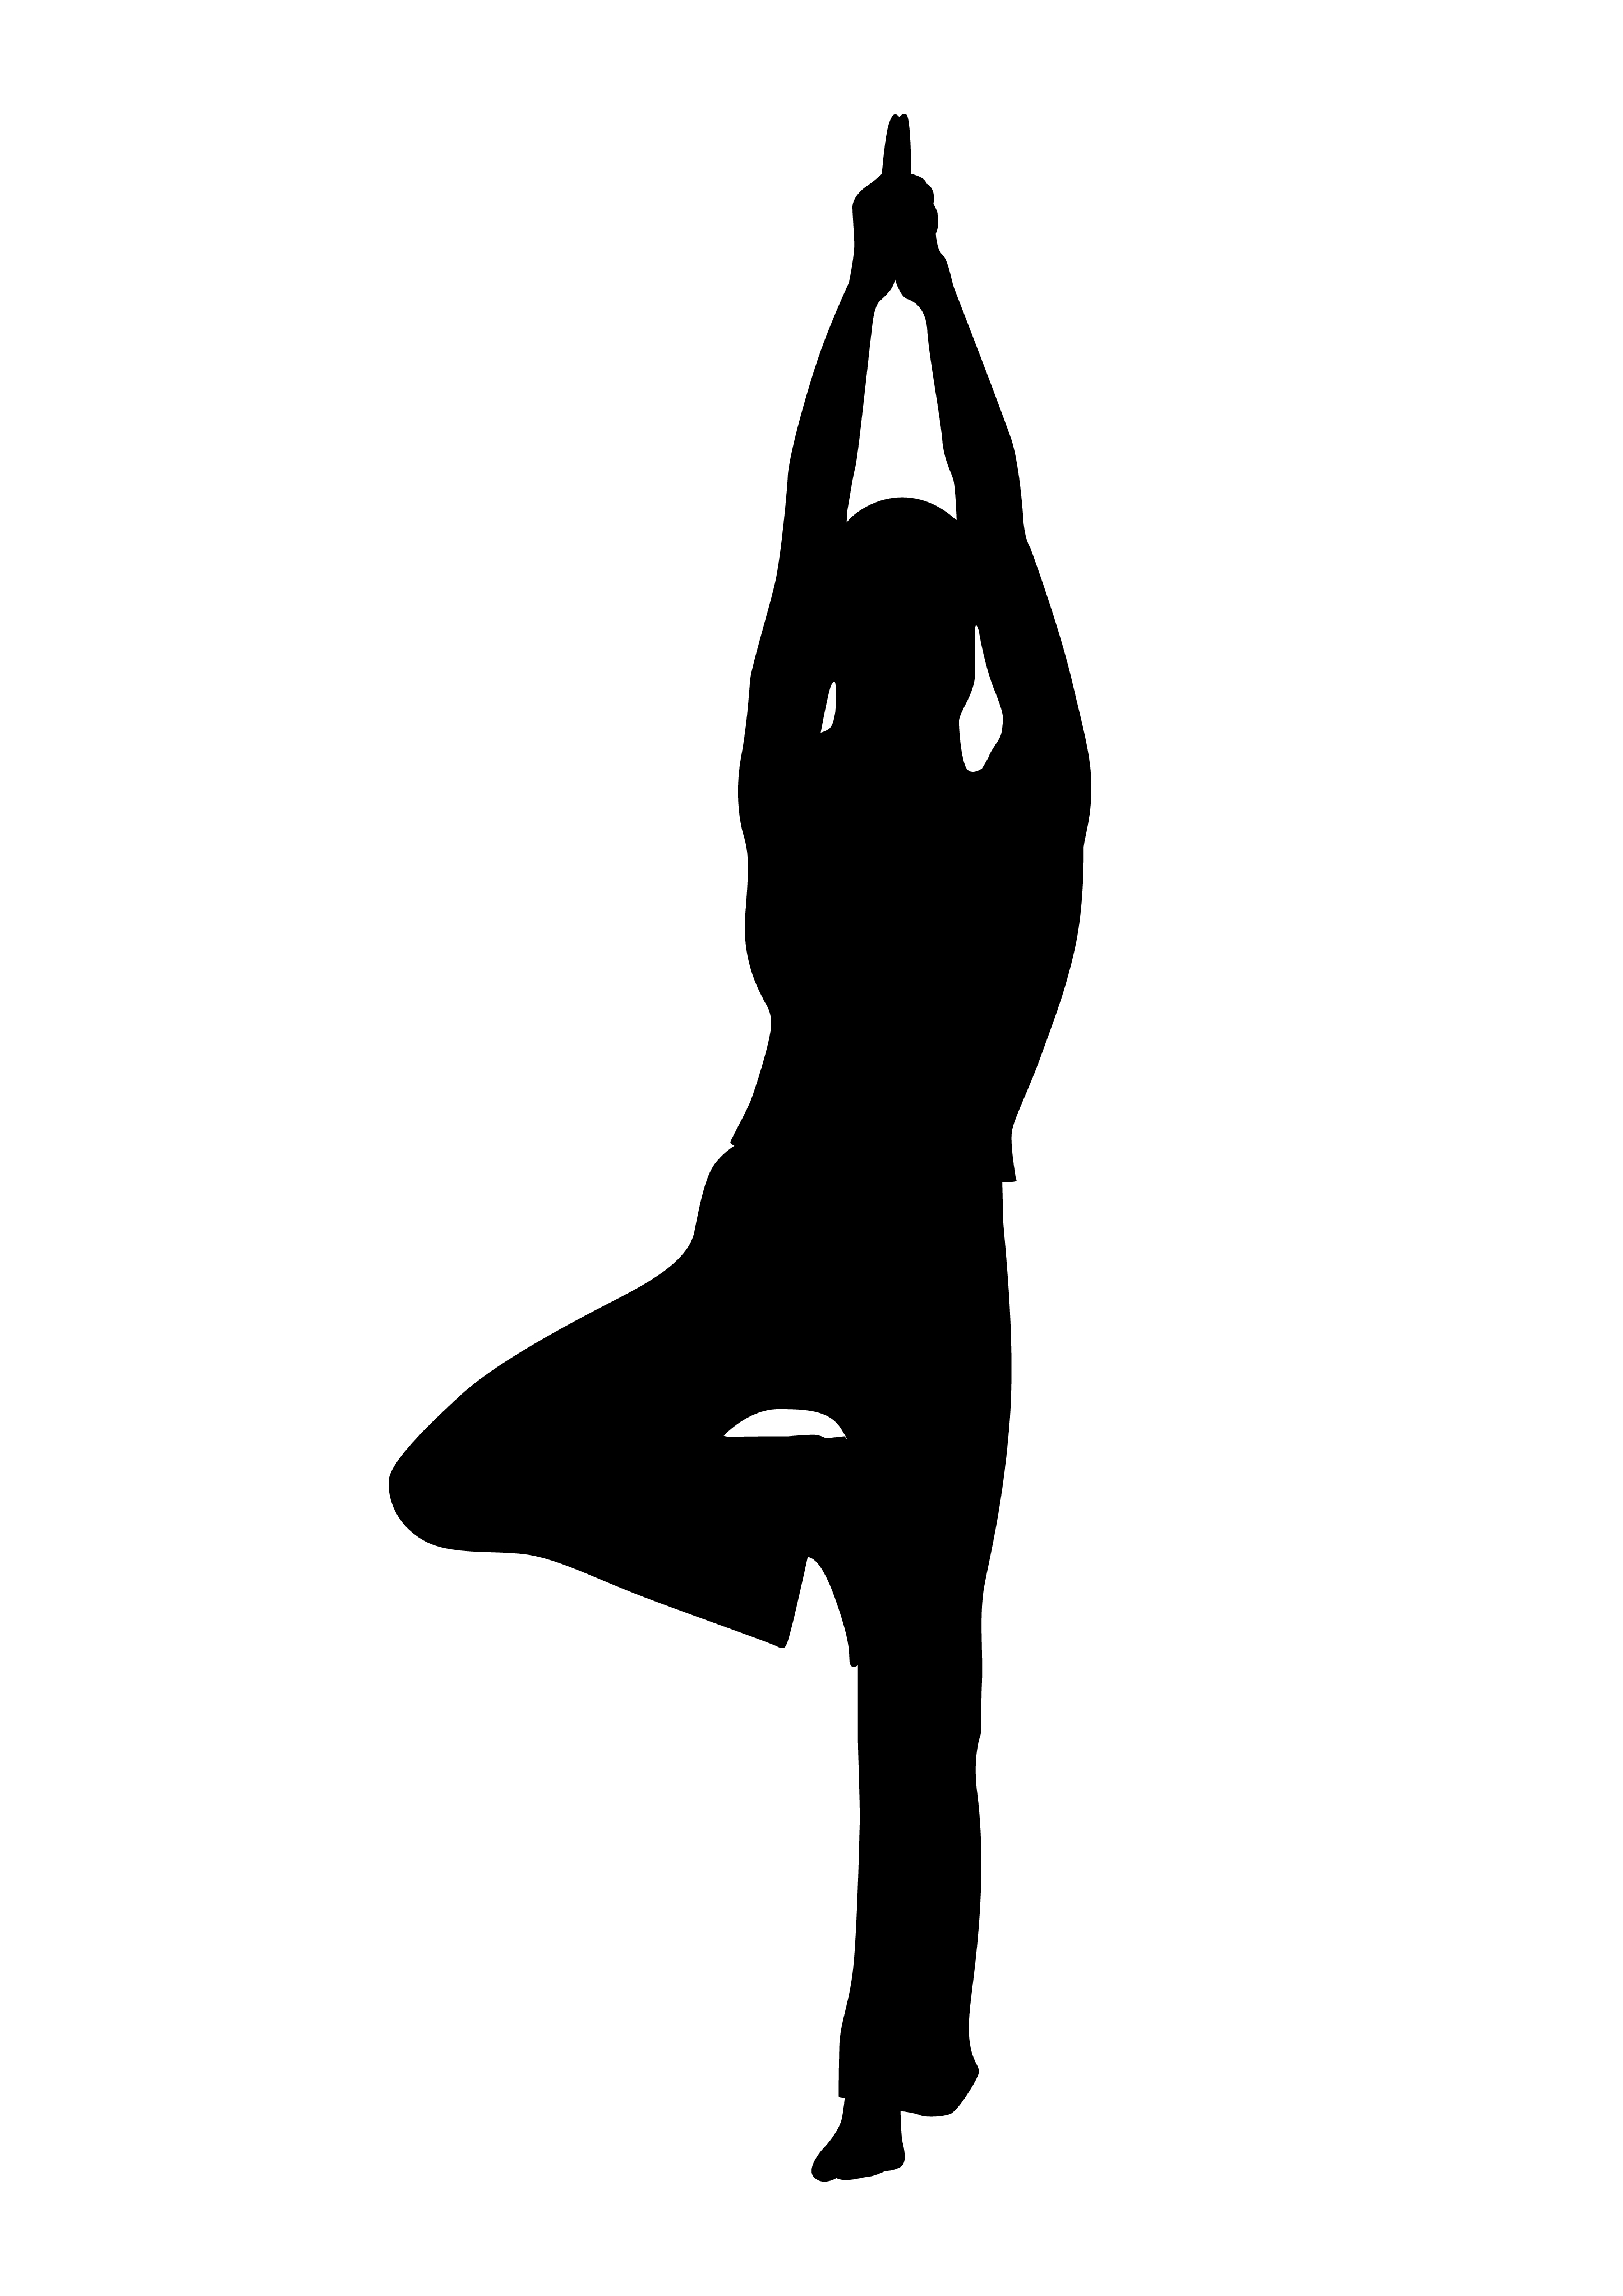 Yoga poses clipart